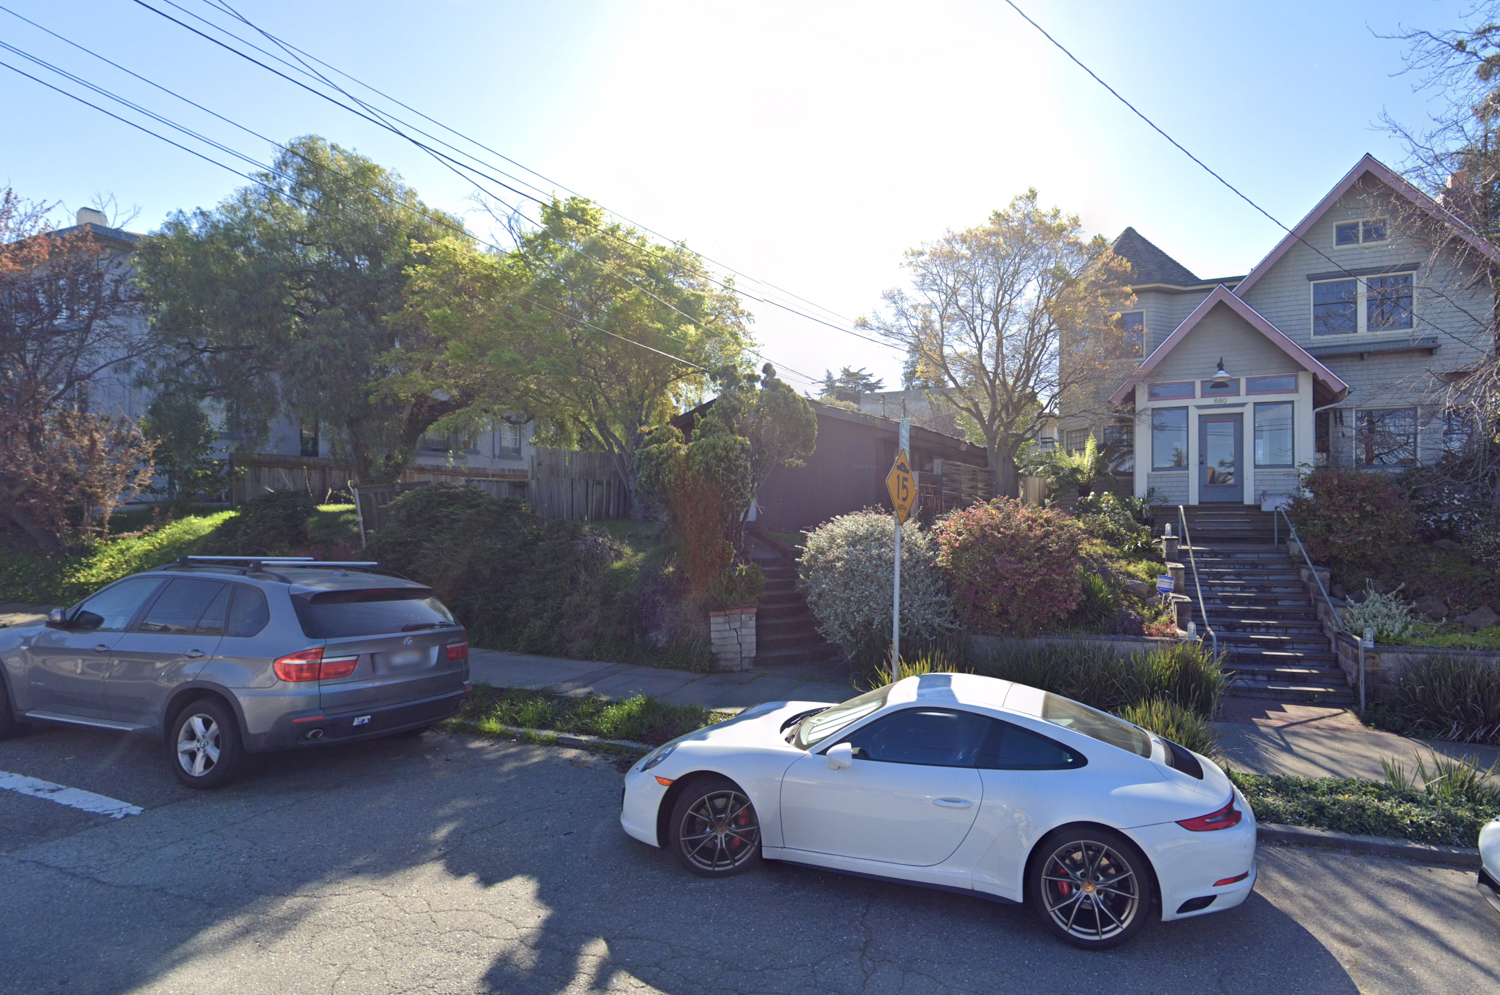 684 Fairmount Avenue existing condition, image via Google Street View